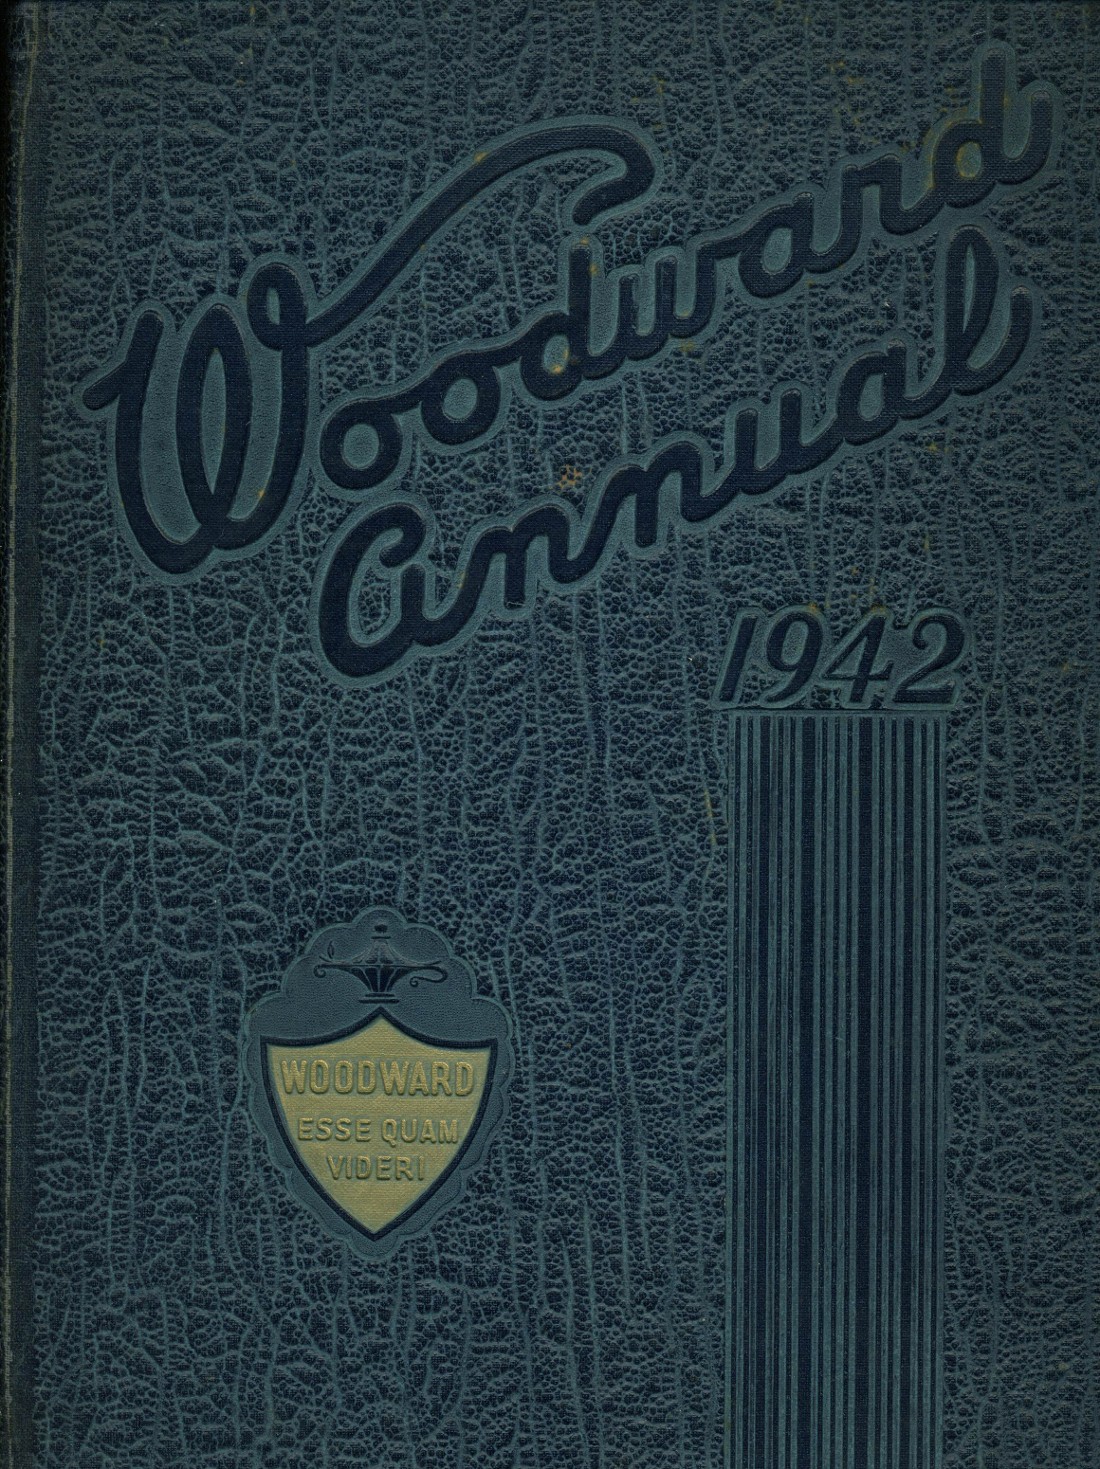 Woodward High School from Cincinnati, Ohio Yearbooks